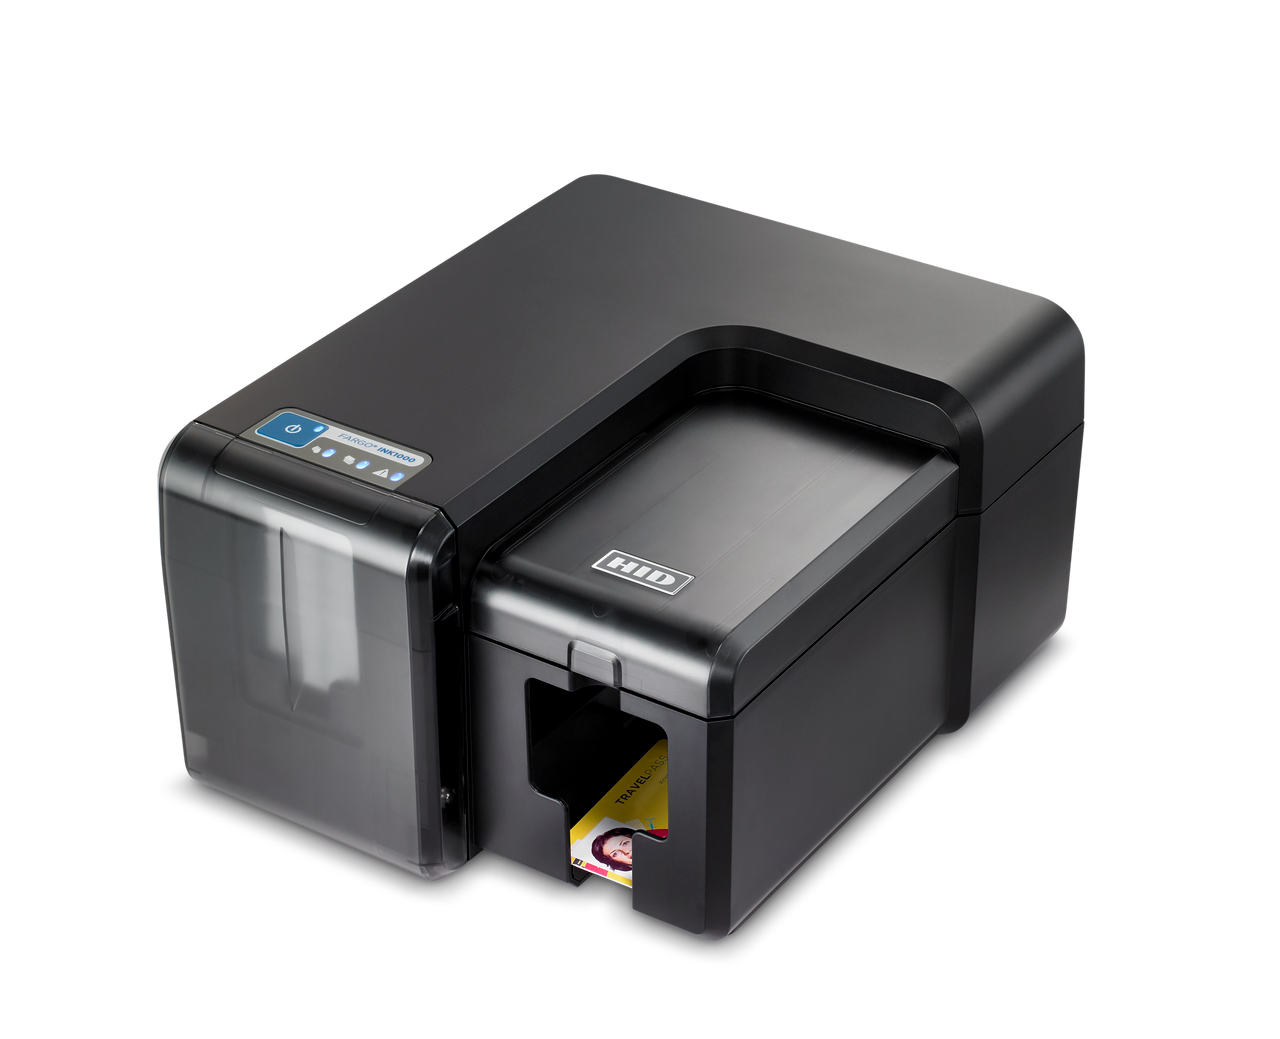 Nisca PR-C151 Complete ID Card Printer System - Easy Badges